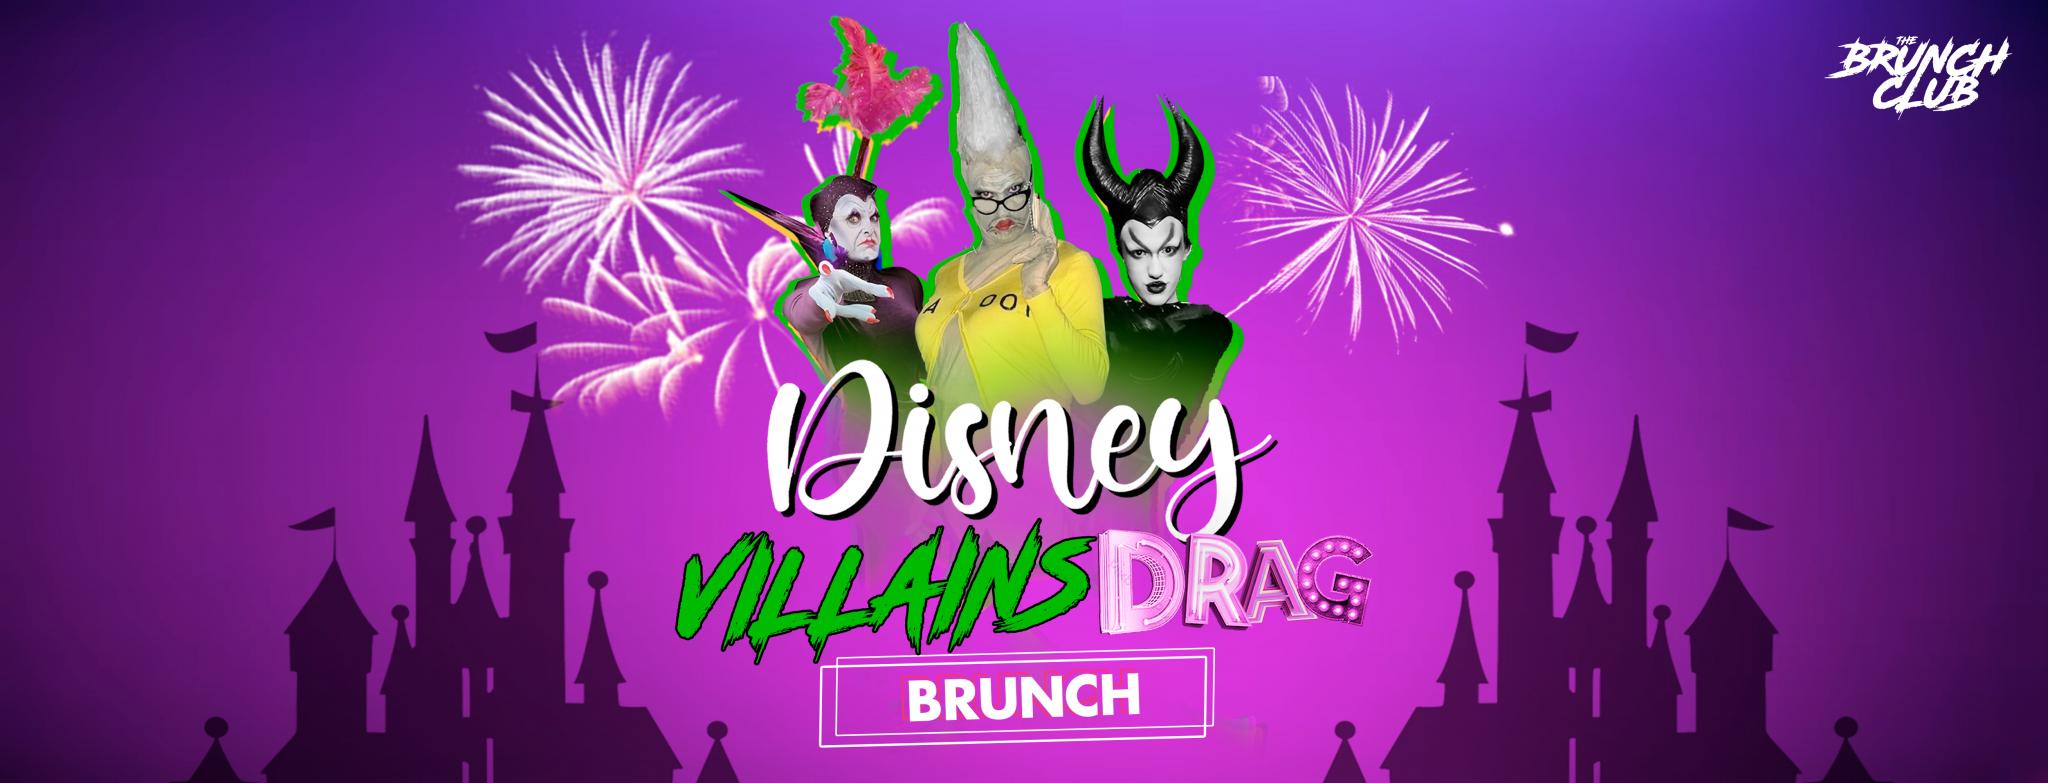 Disney Villains Drag Bottomless Brunch - Birmingham